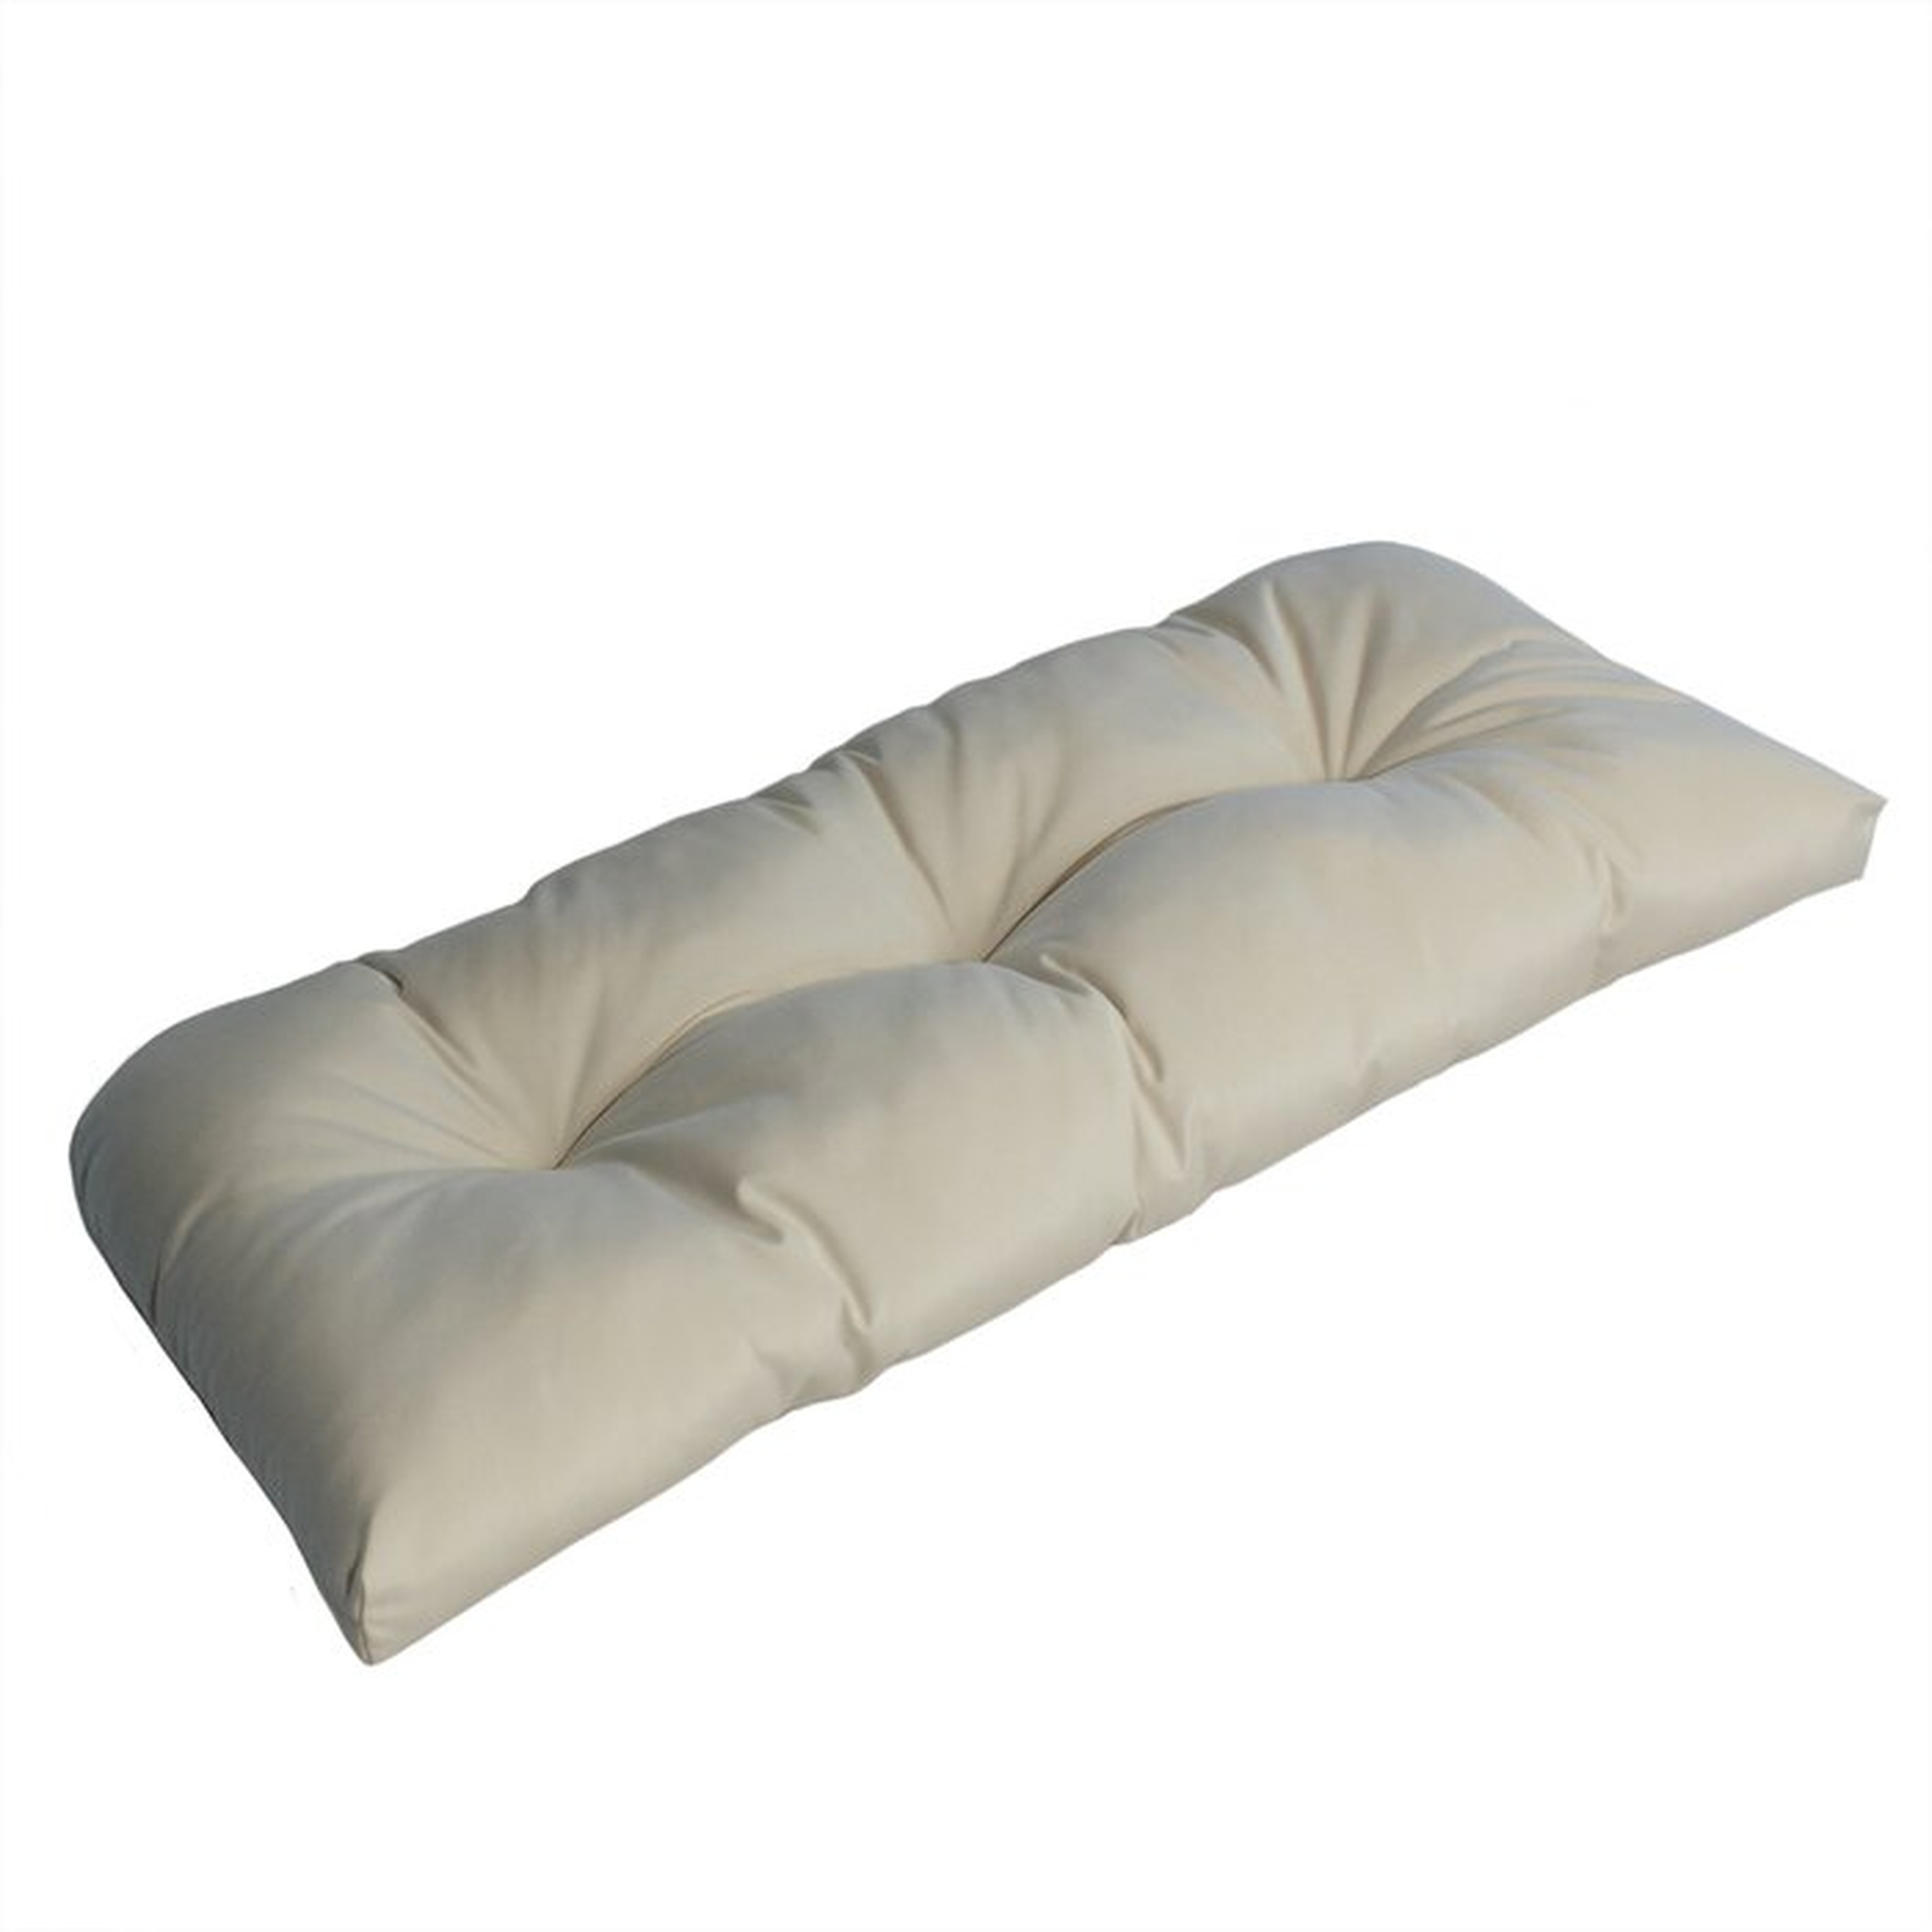 Wicker Indoor/Outdoor Sunbrella Seat Cushion - Wayfair